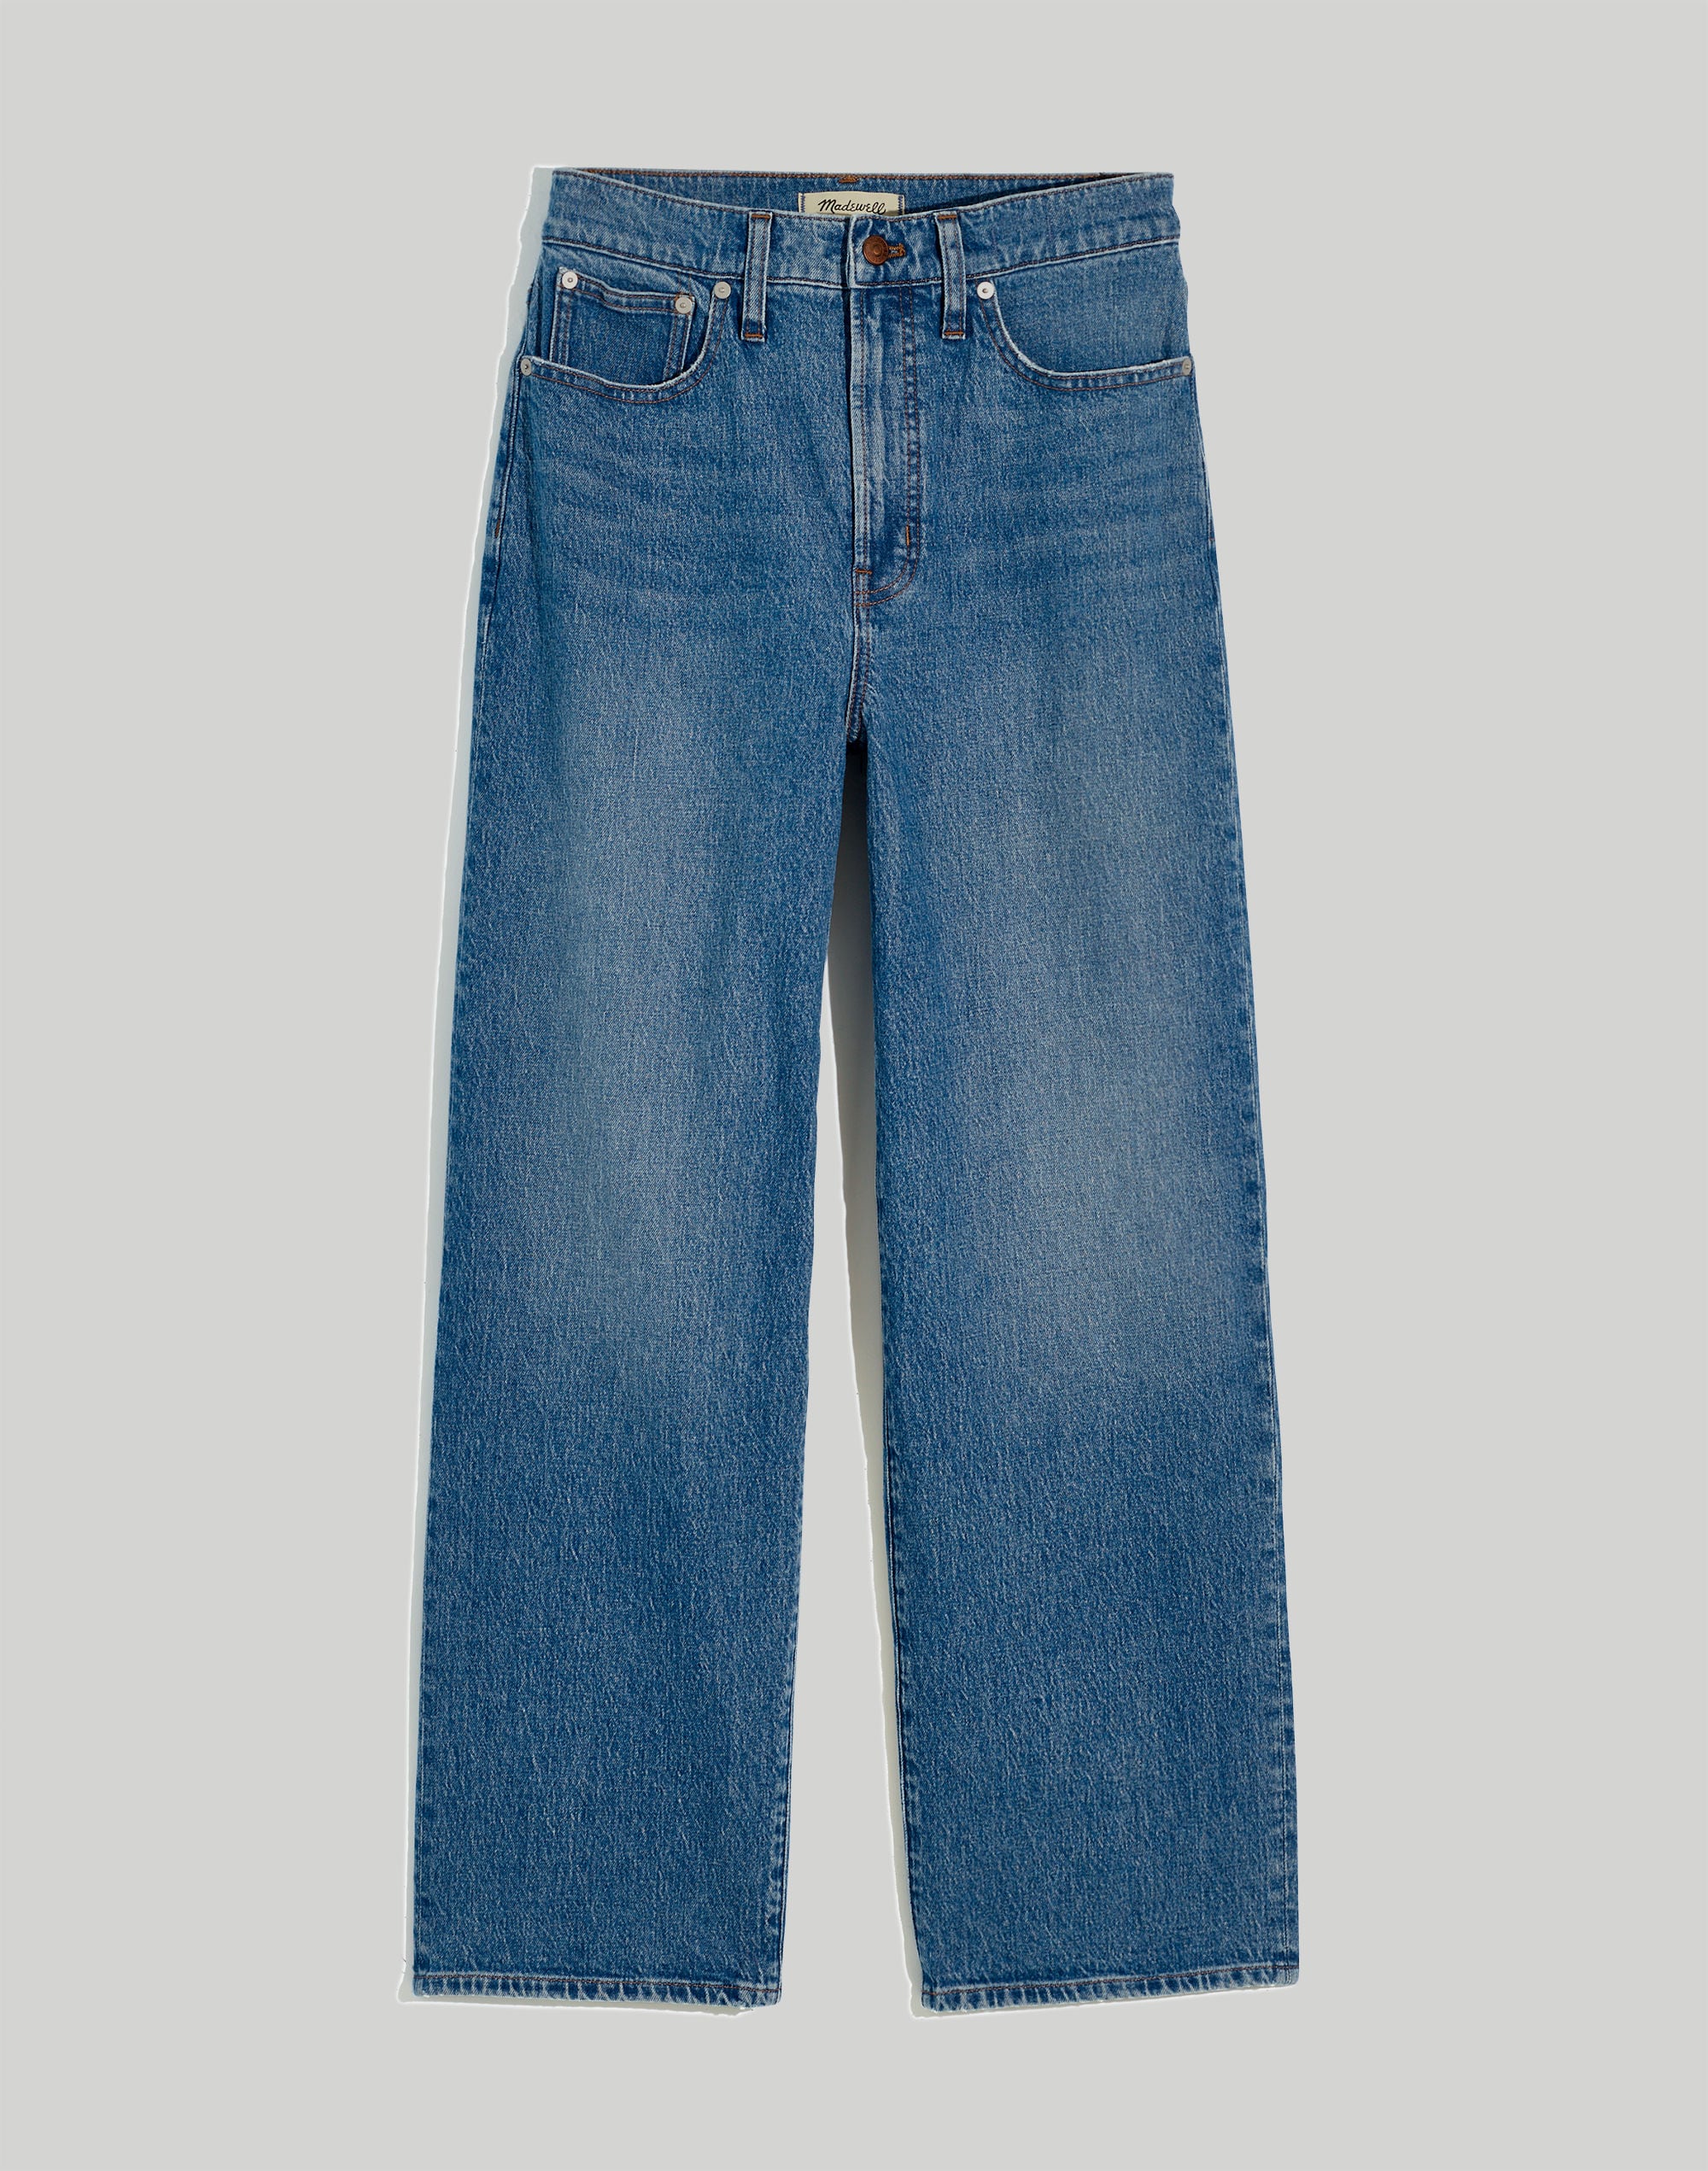 The Perfect Vintage Wide-Leg Crop Jean in Cresslow Wash